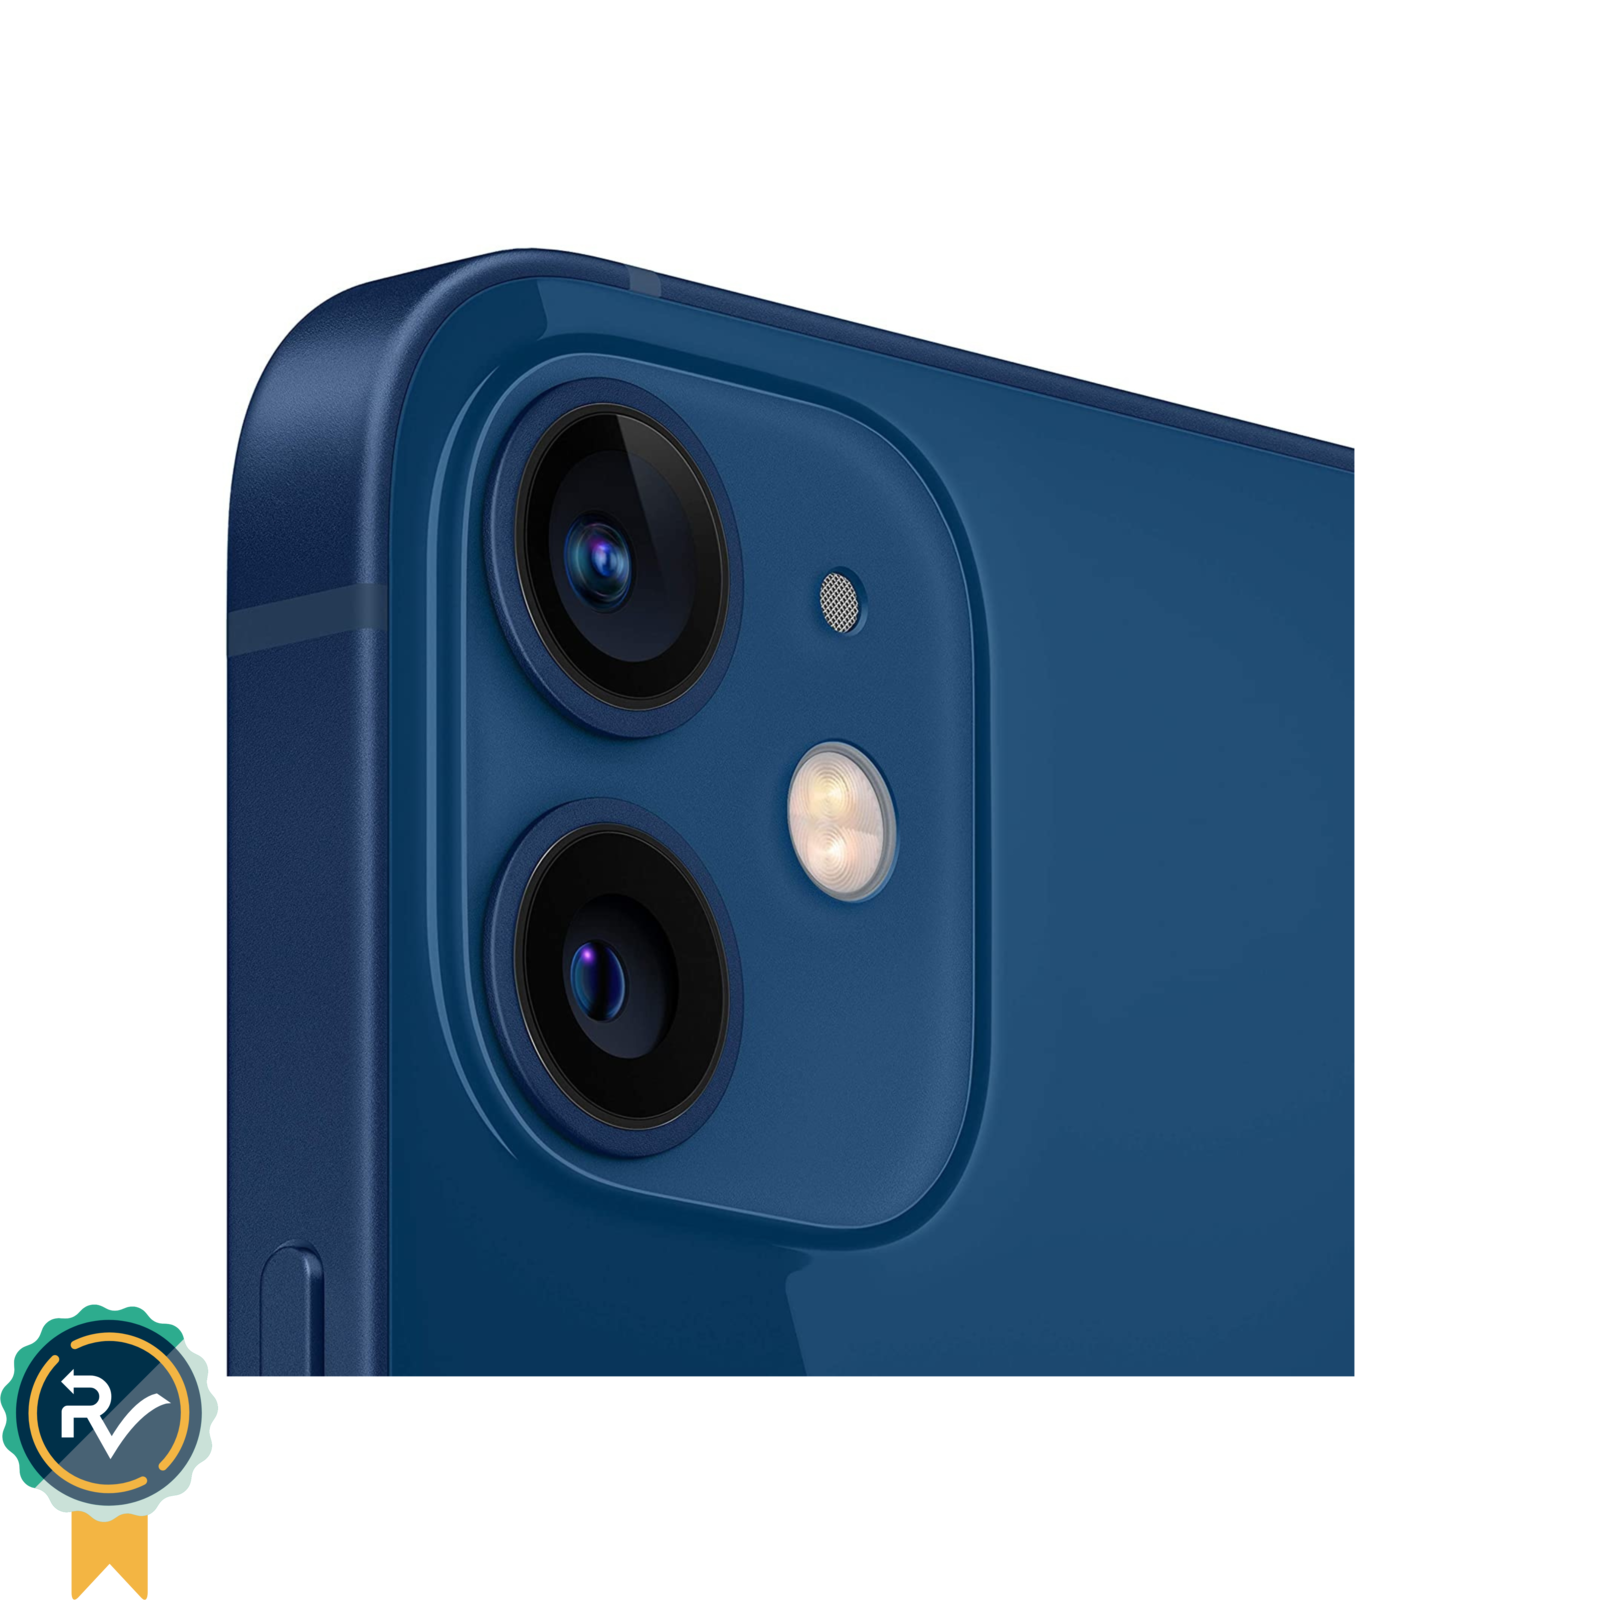 Apple iPhone 12 Mini 256GB Blauw